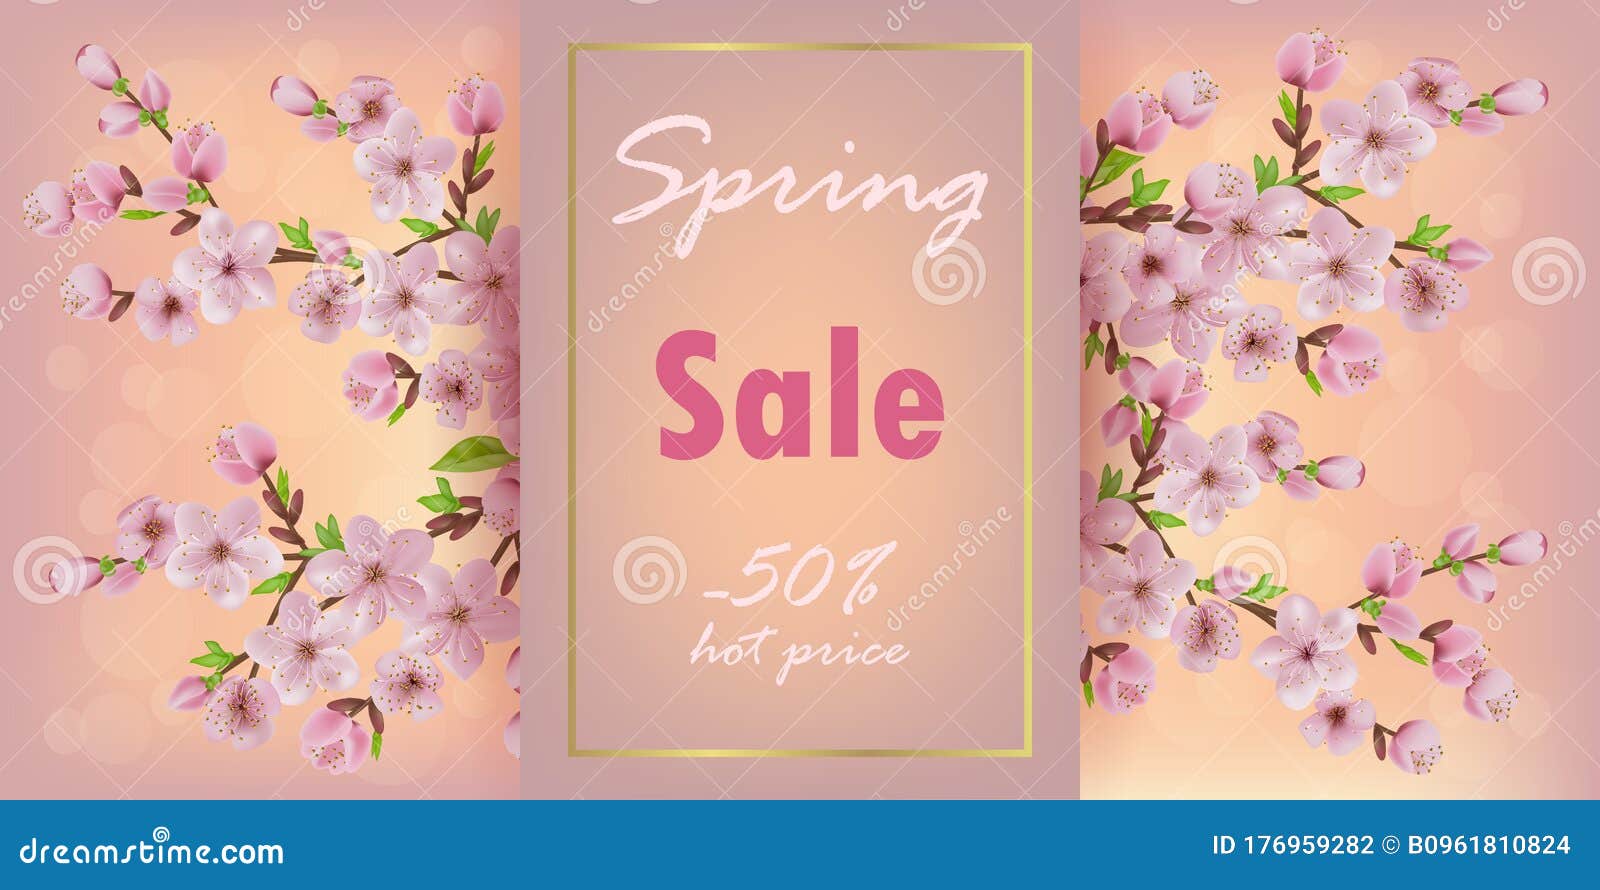 Sakura Sale Spring Discount Pink Cherry Blossom Flowers Floral